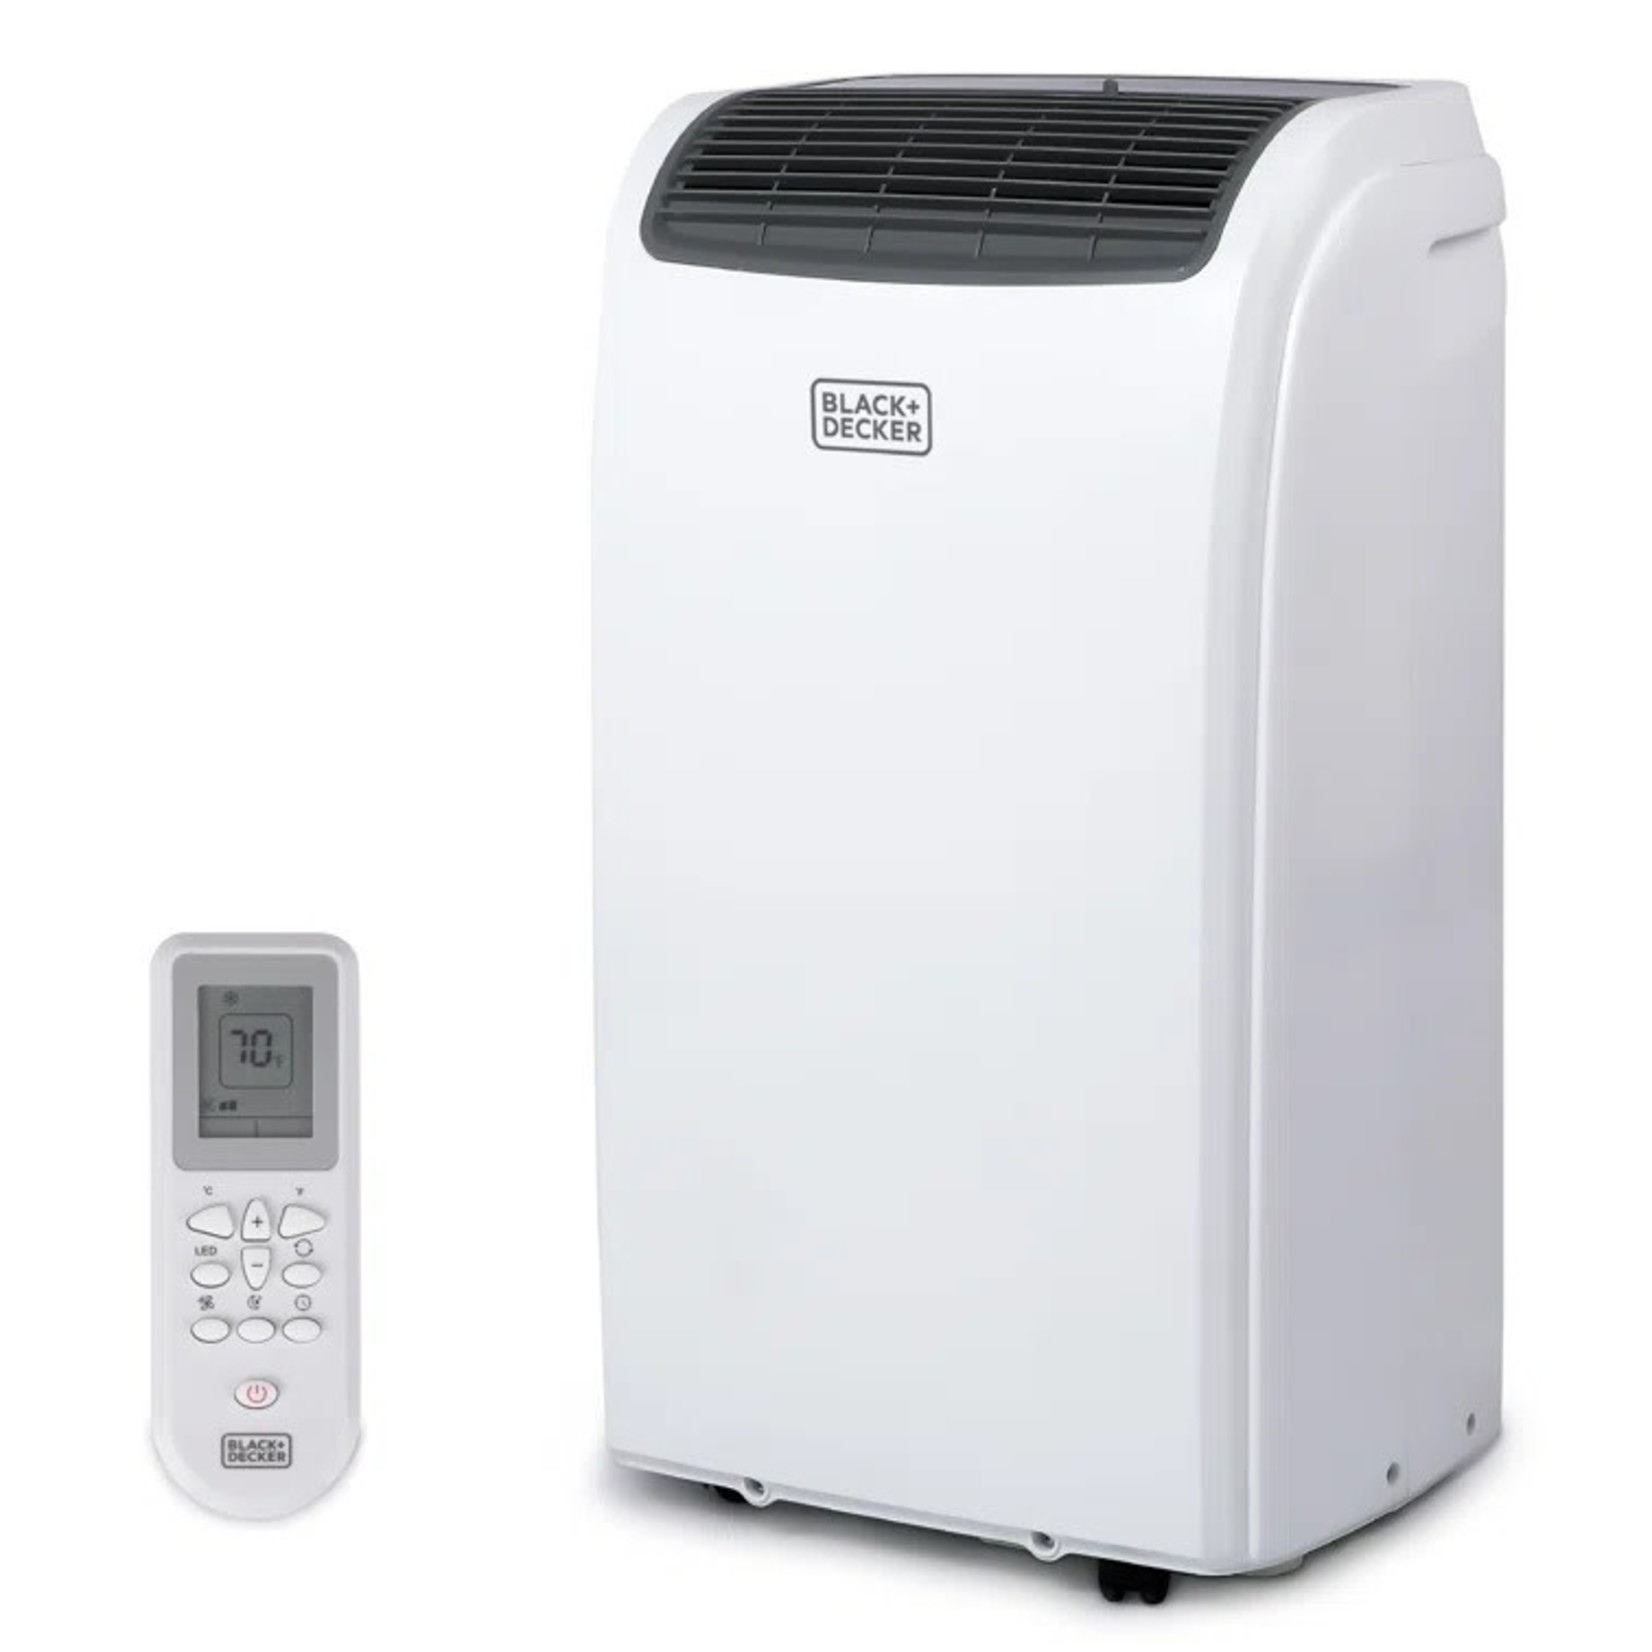 *10,000 BTU Portable Air Conditioner with Remote